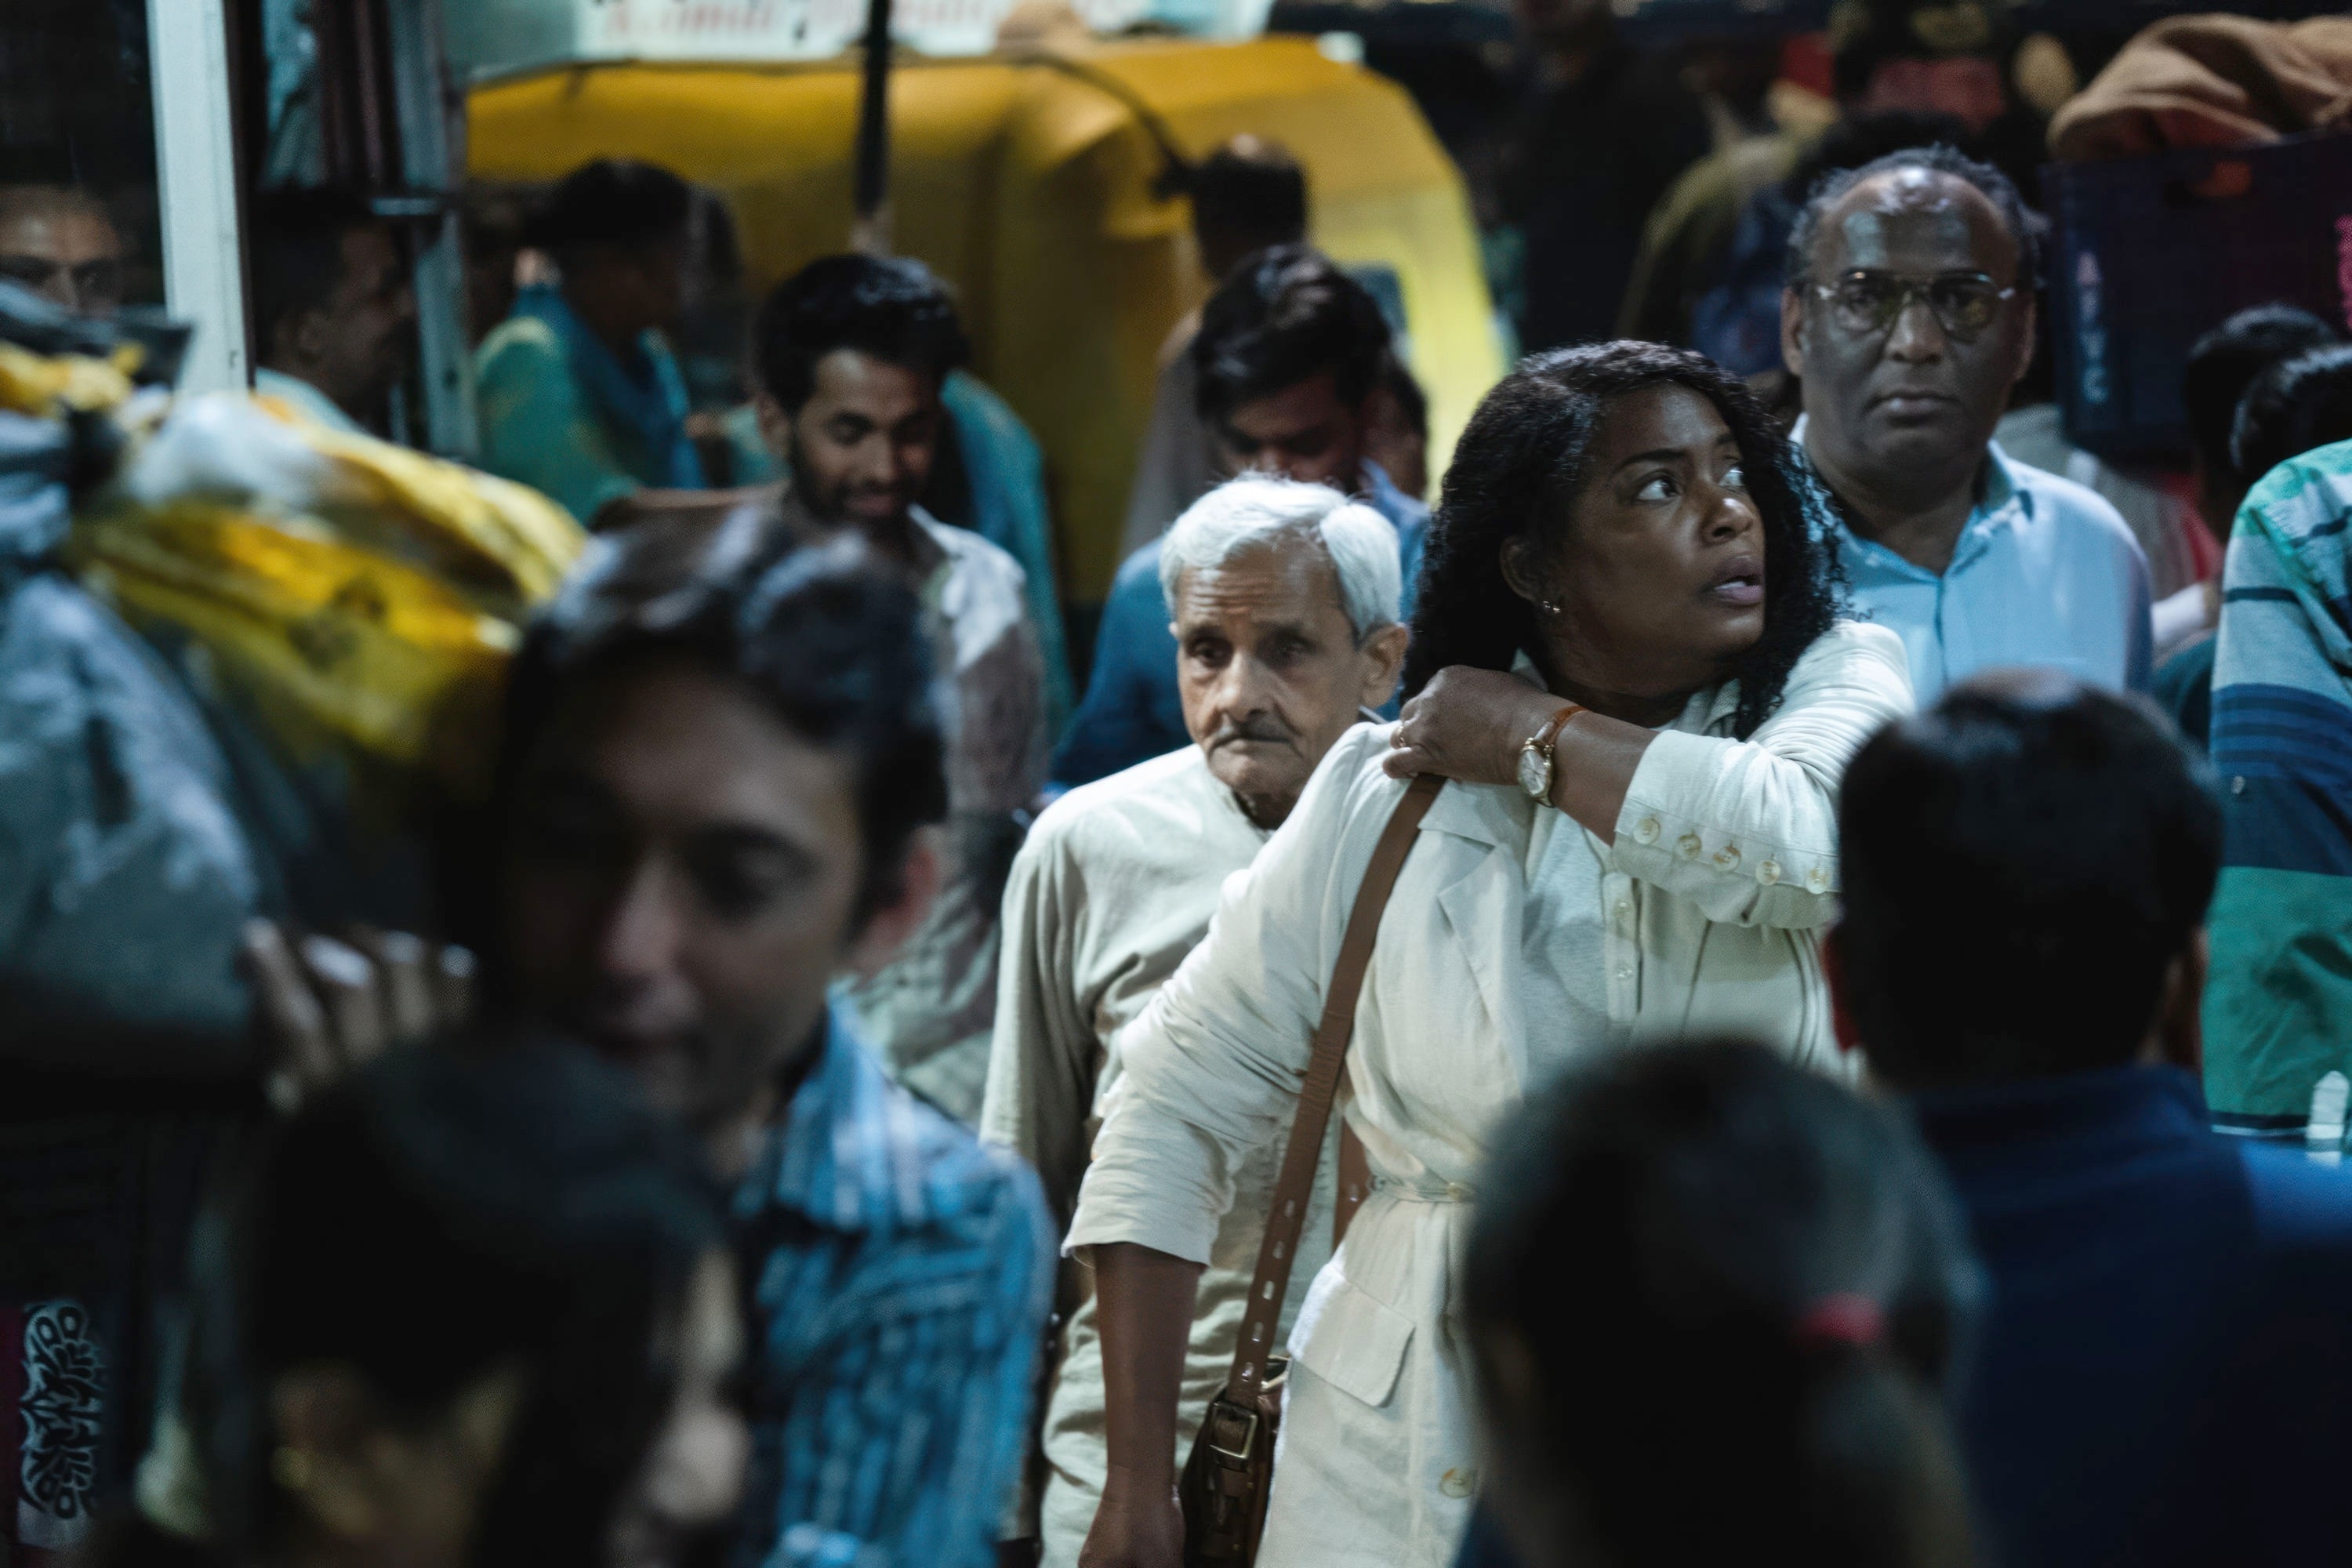 Aunjanue Ellis-Taylor walks through a crowded Indian street